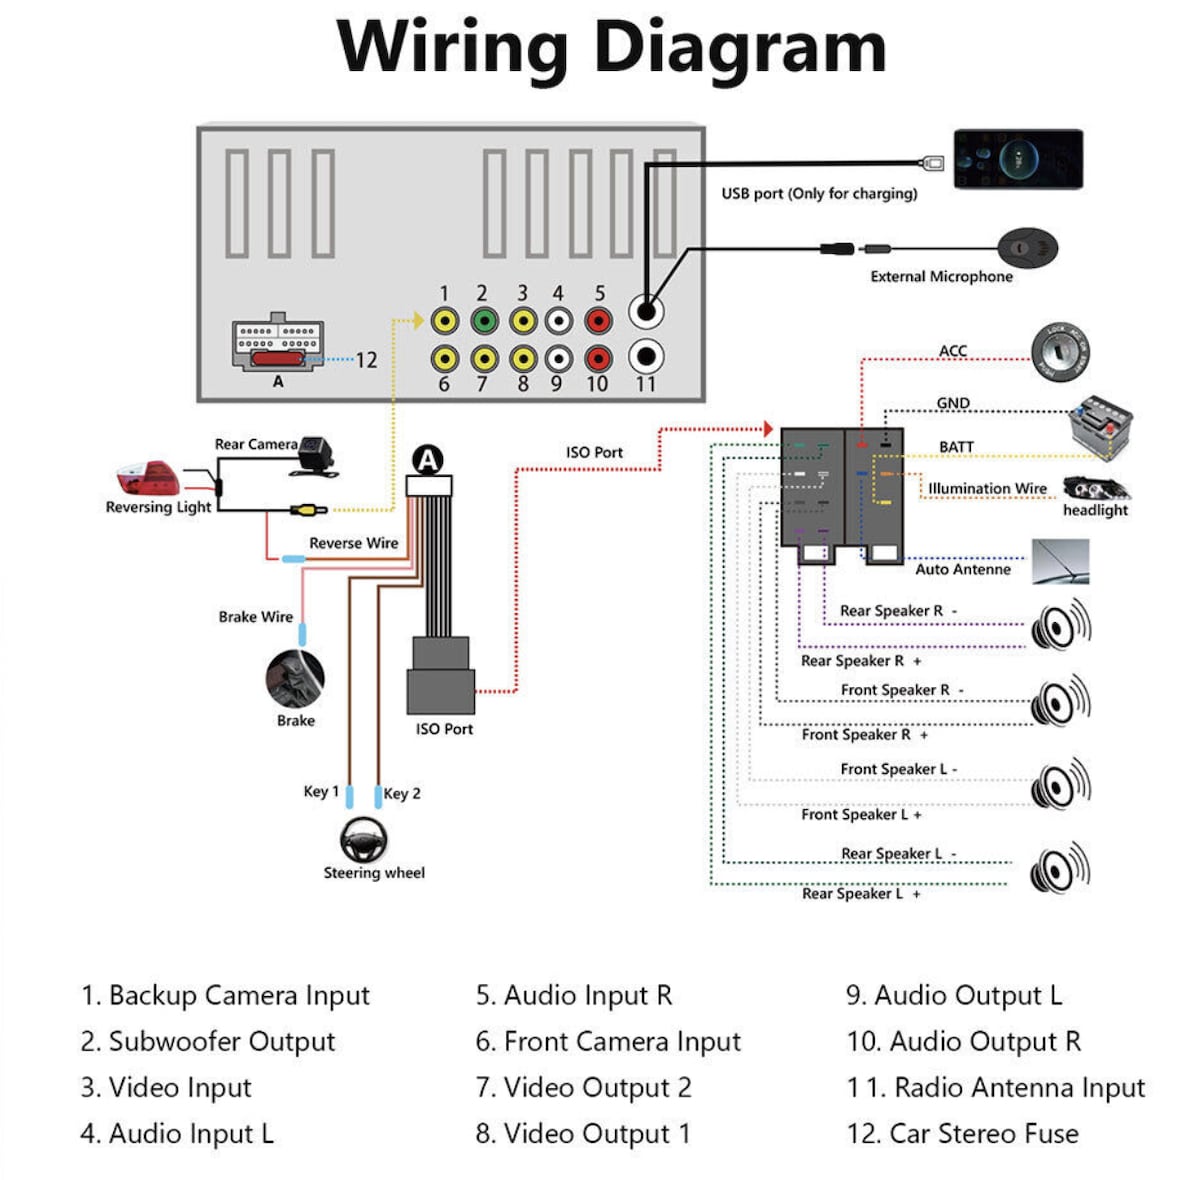 Single subwoofer output rear deck wiring diagram